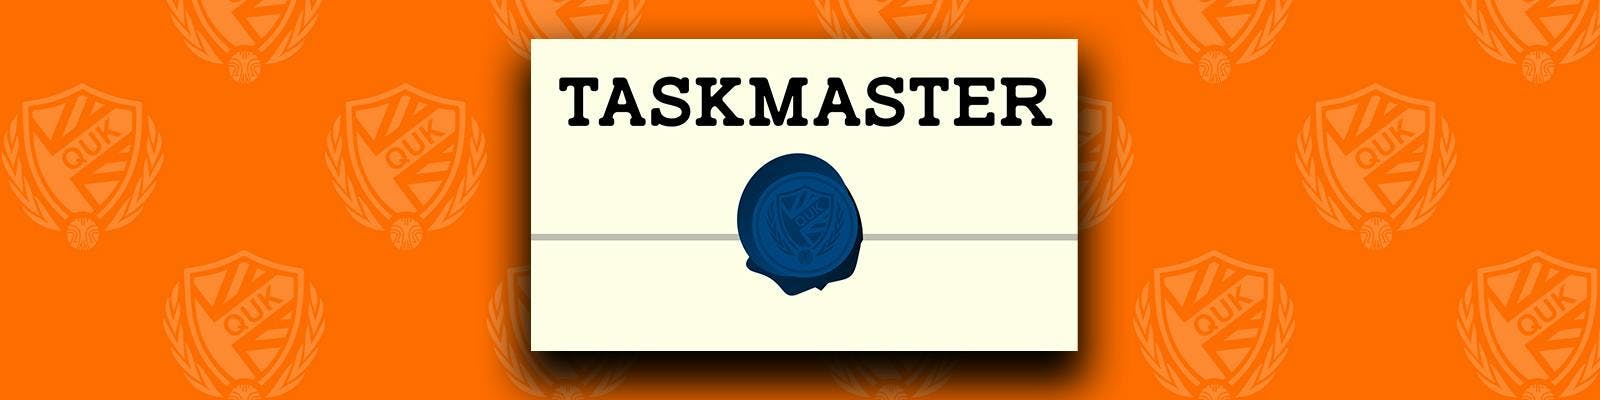 The Taskmaster (QUK) Logo on an orange background with QUK crests (Week 6 of QUK Taskmaster)